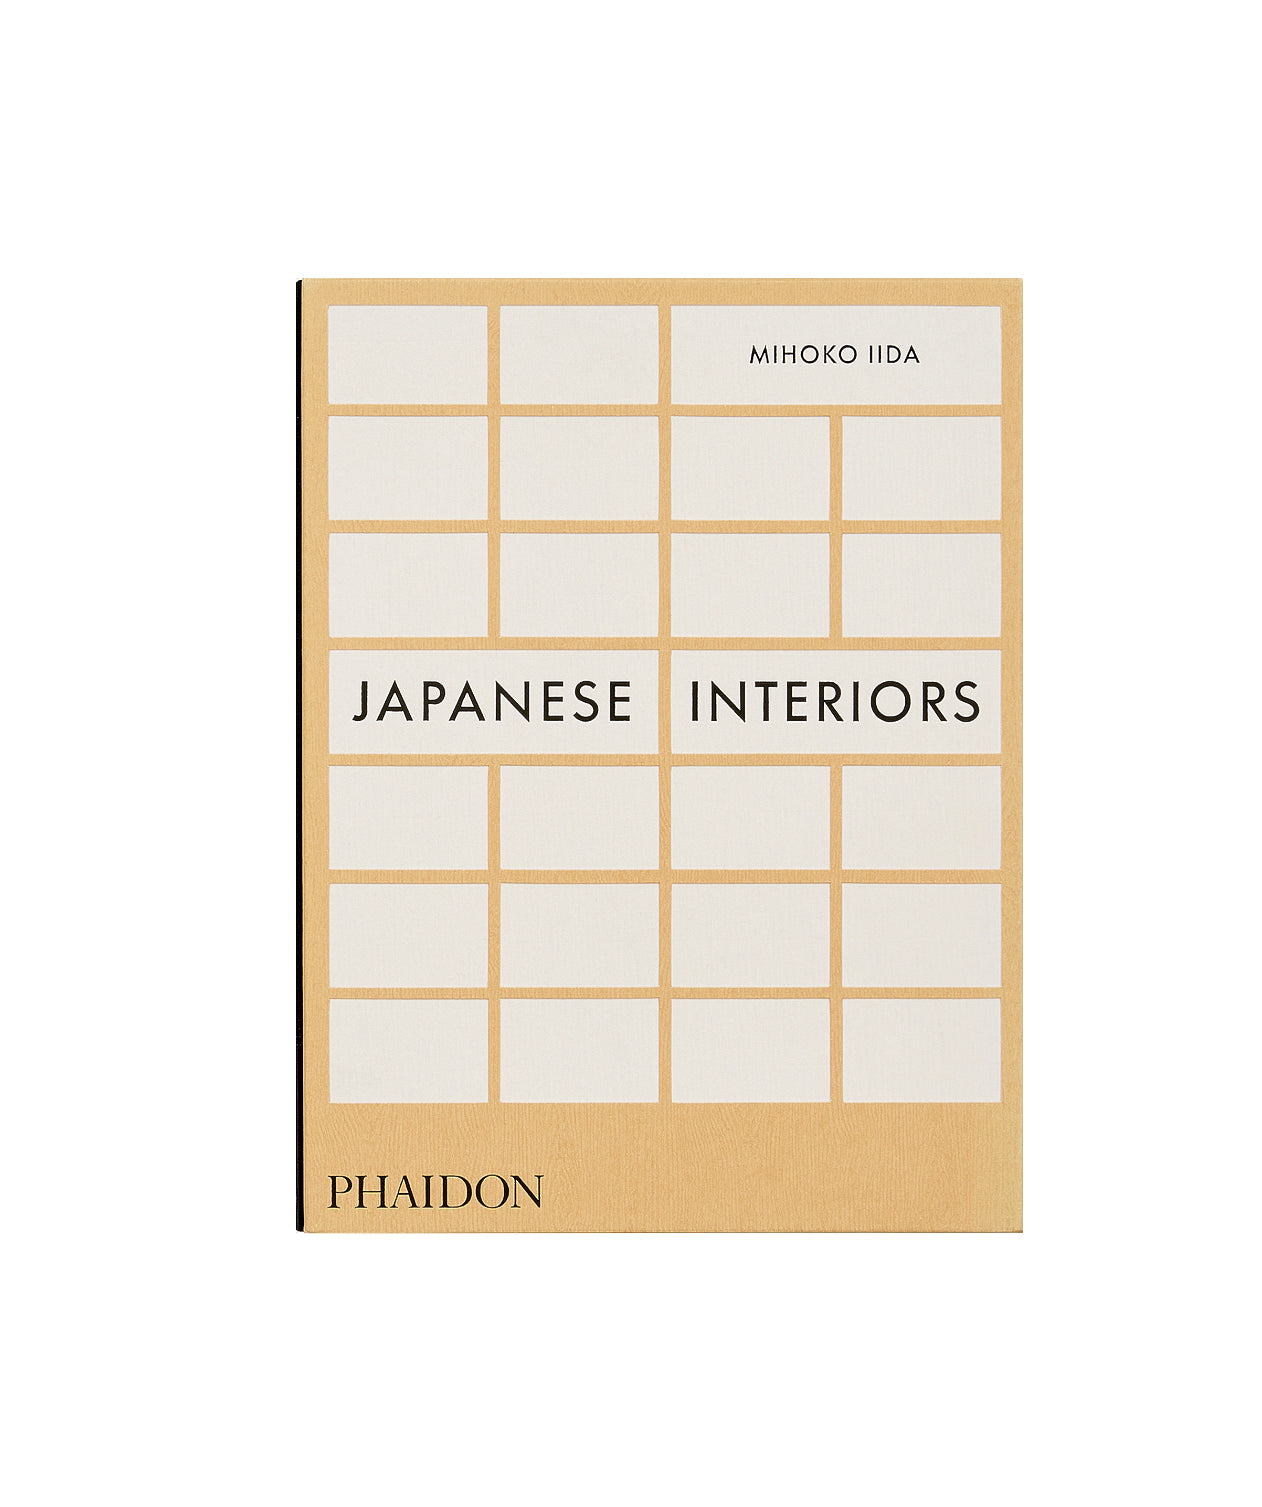 "Intérieurs japonais", Mihoko Iida